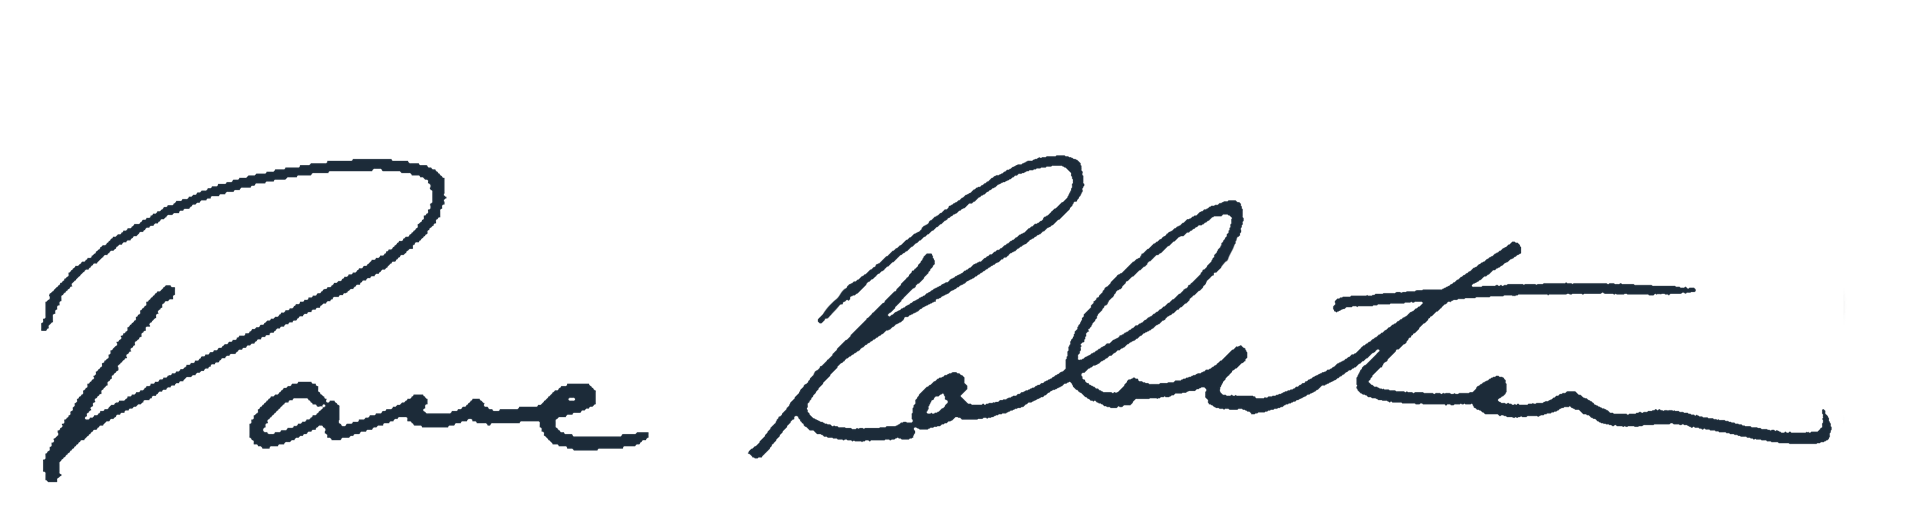 Dave Robertson signature